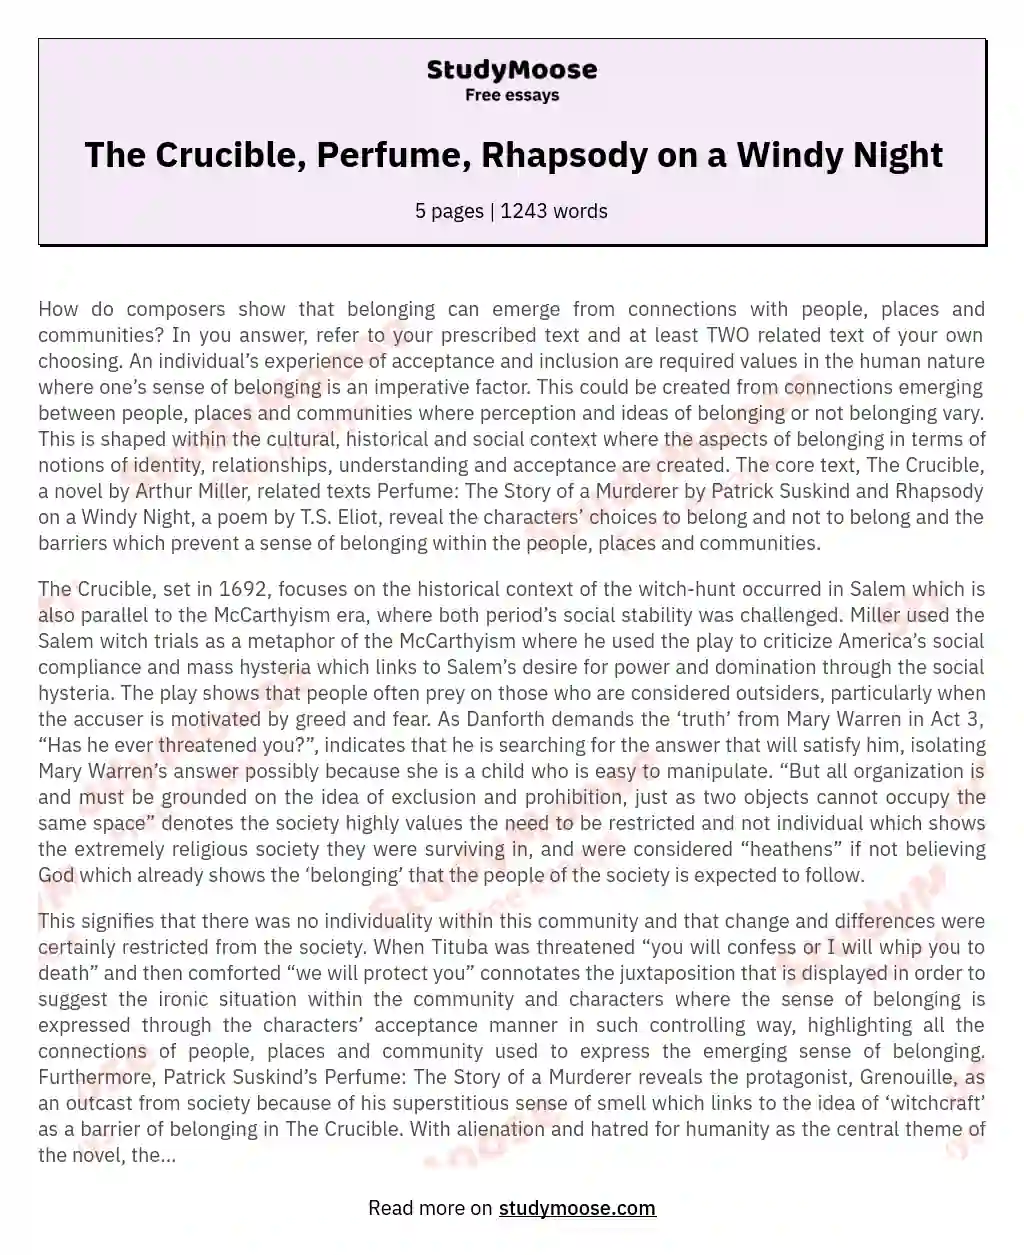 The Crucible, Perfume, Rhapsody on a Windy Night